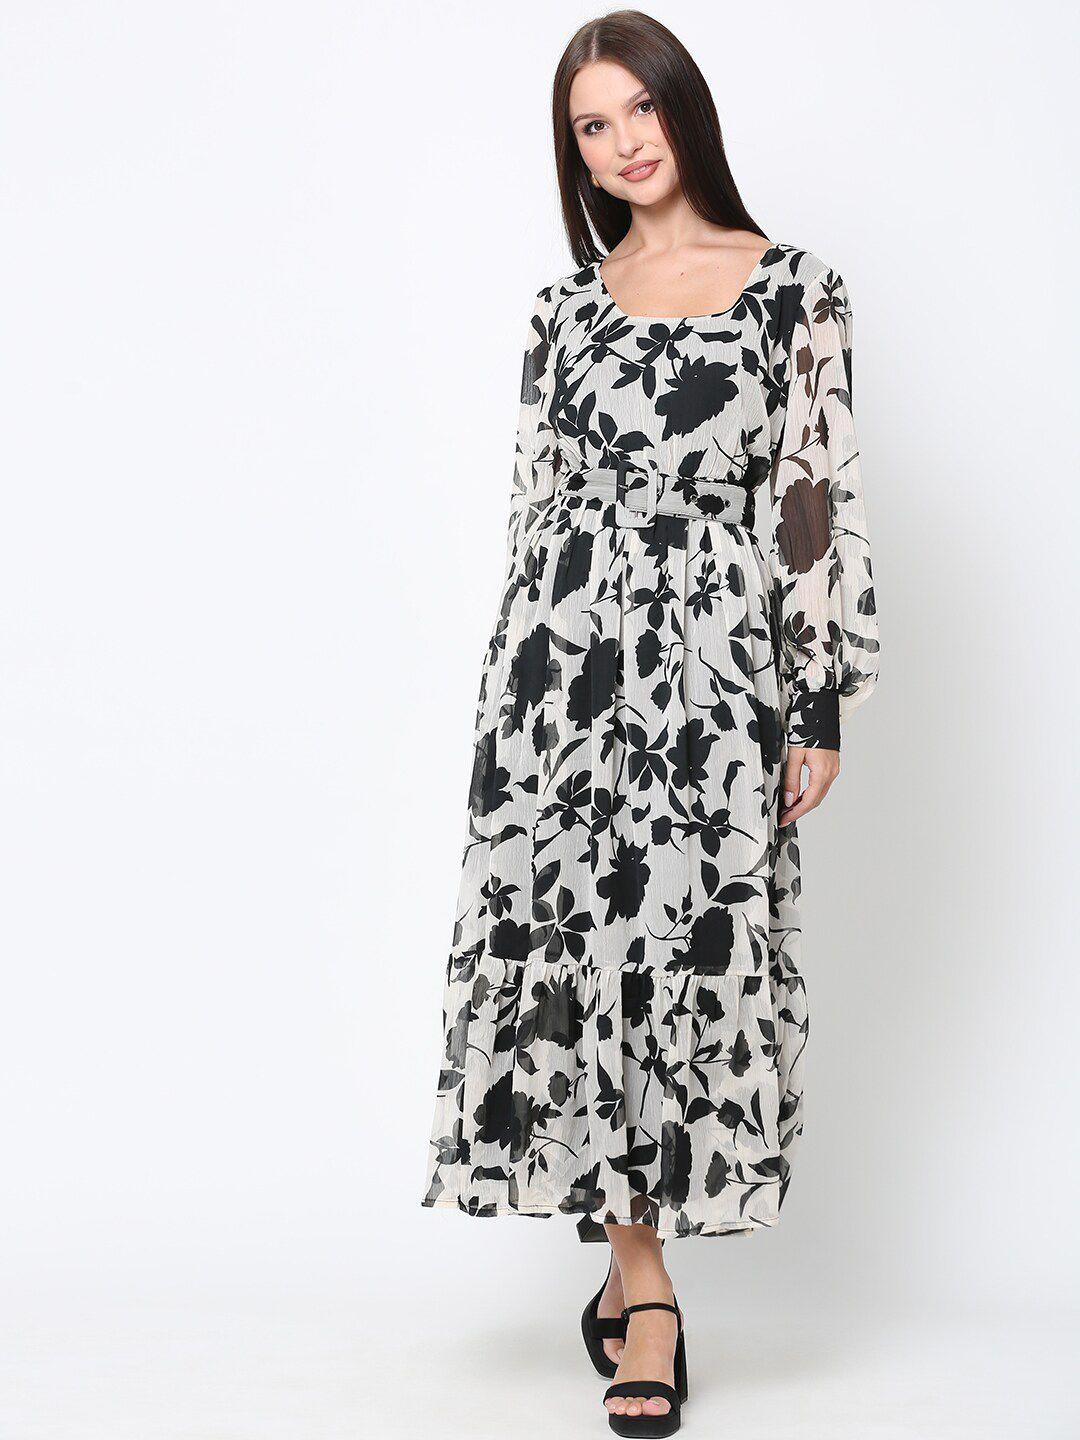 driro off white & black floral printed chiffon maxi dress